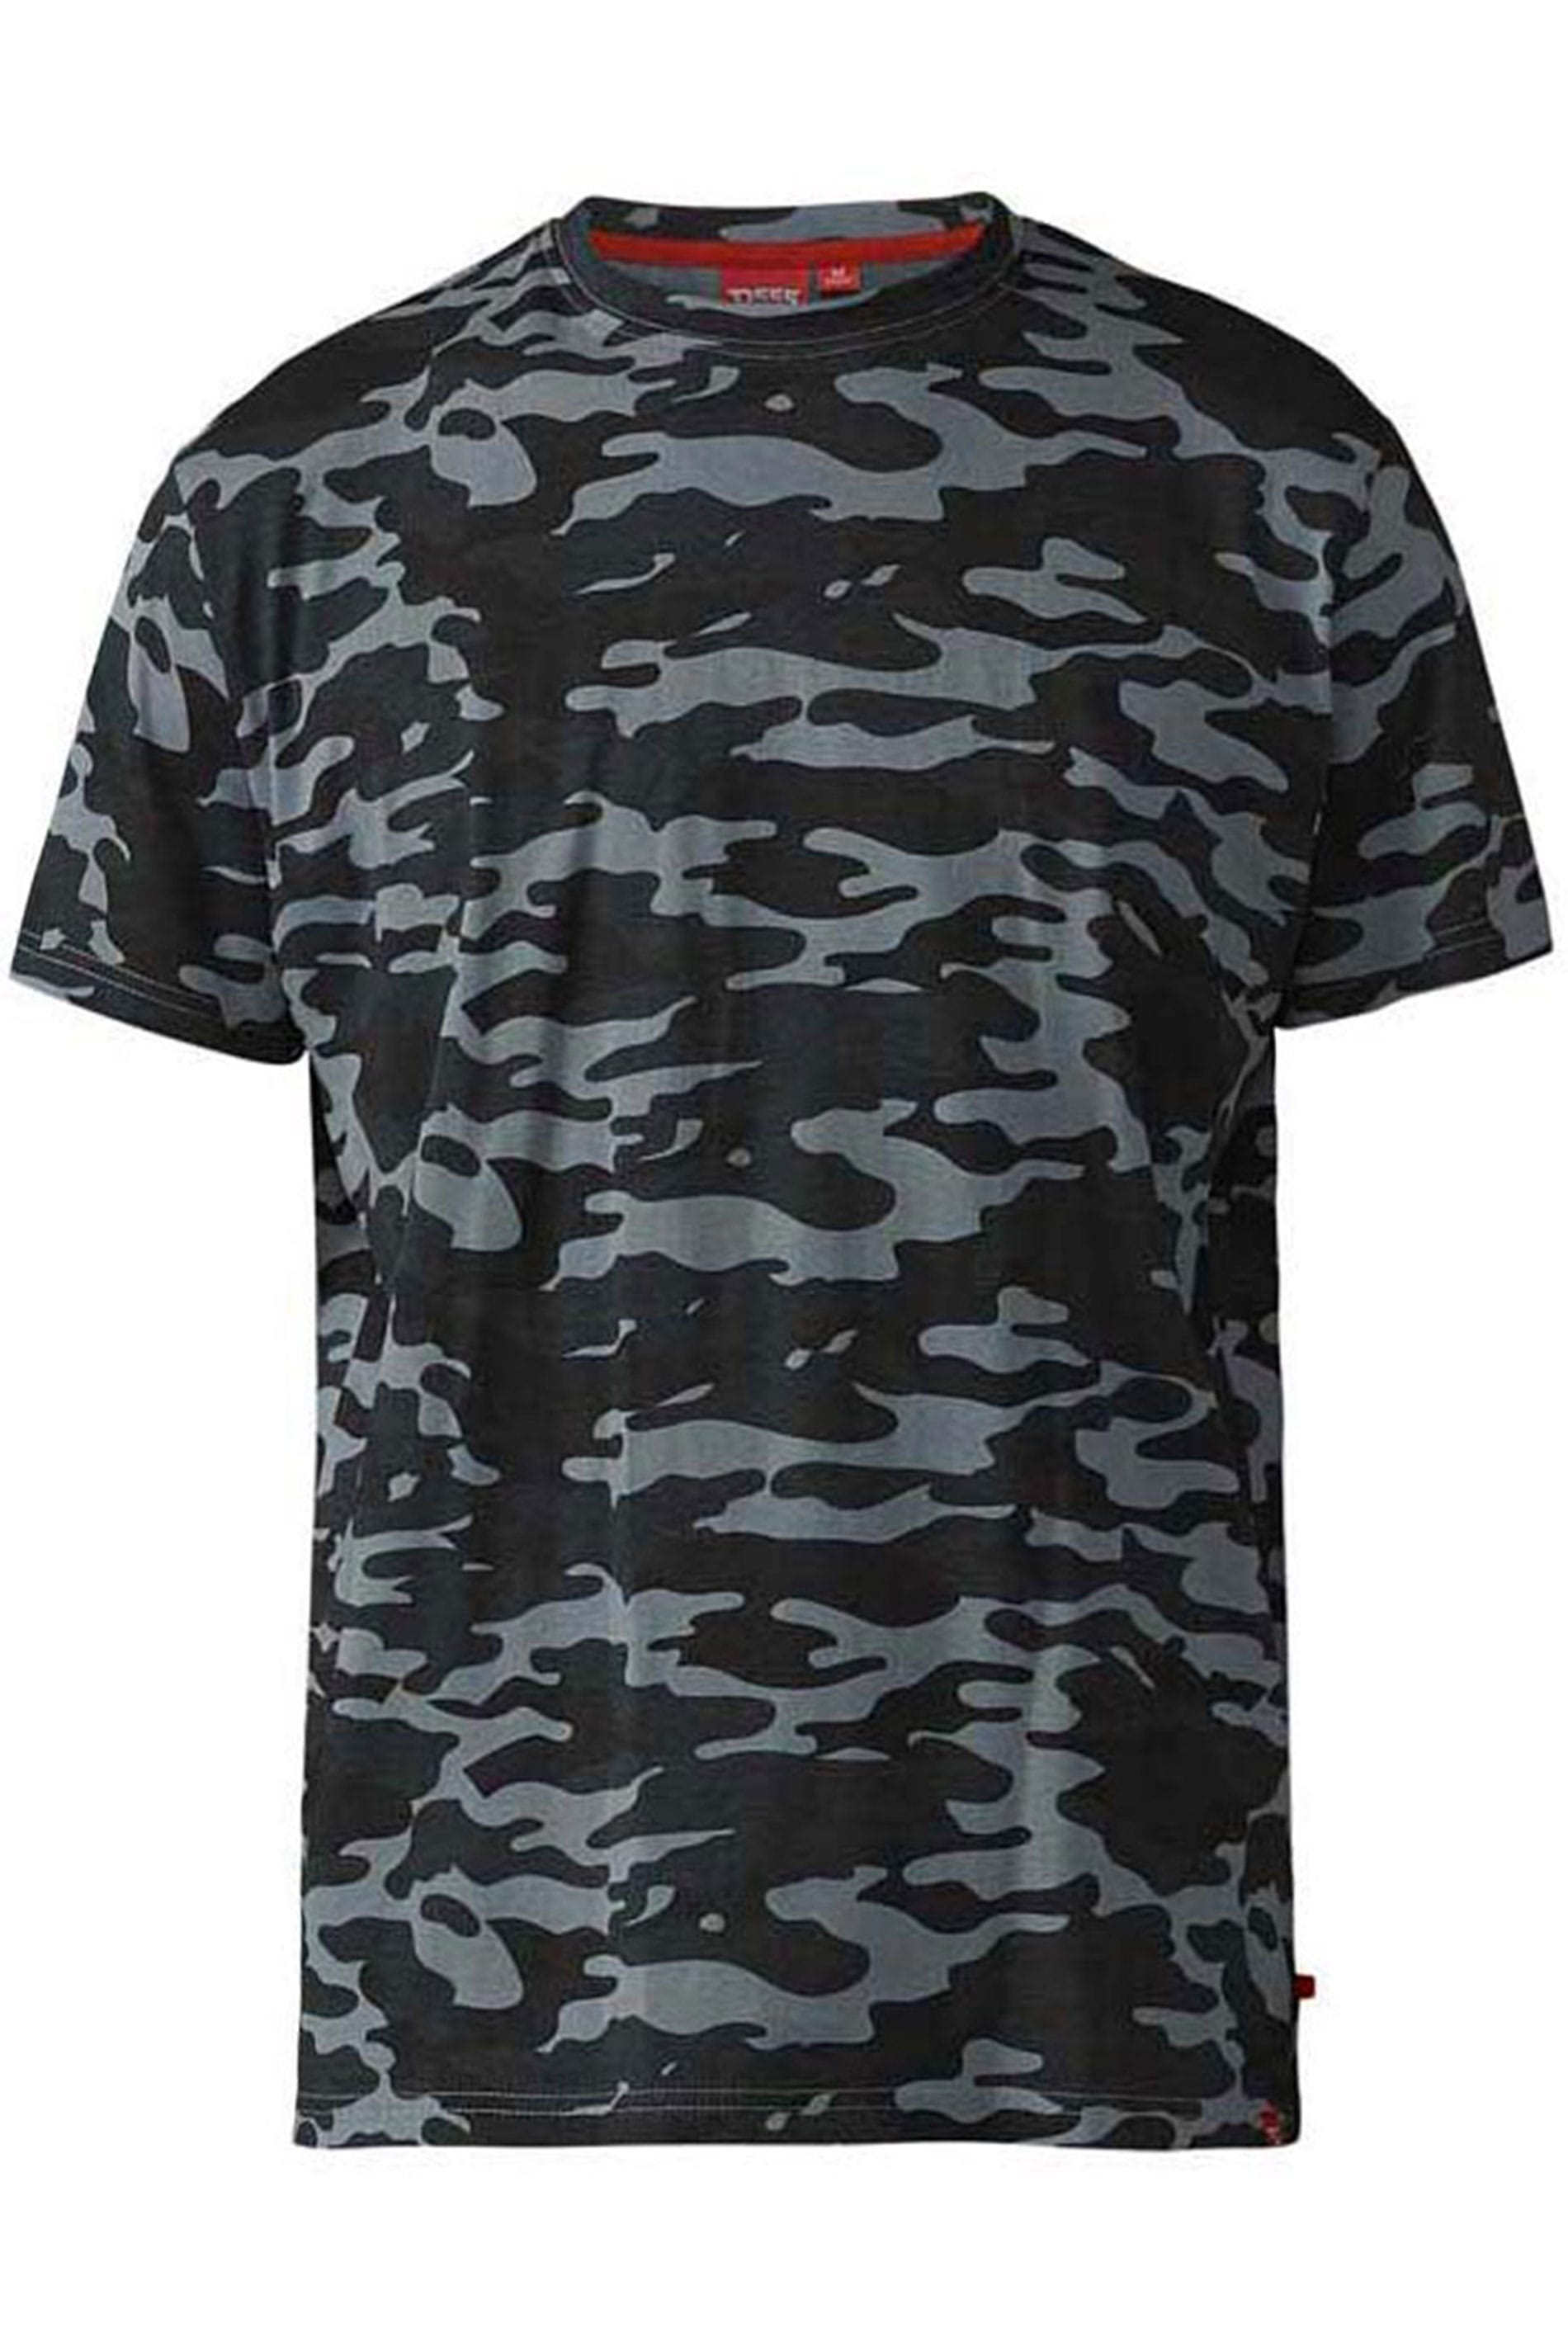 D555 Grey Camouflage Print T-Shirt | BadRhino 1